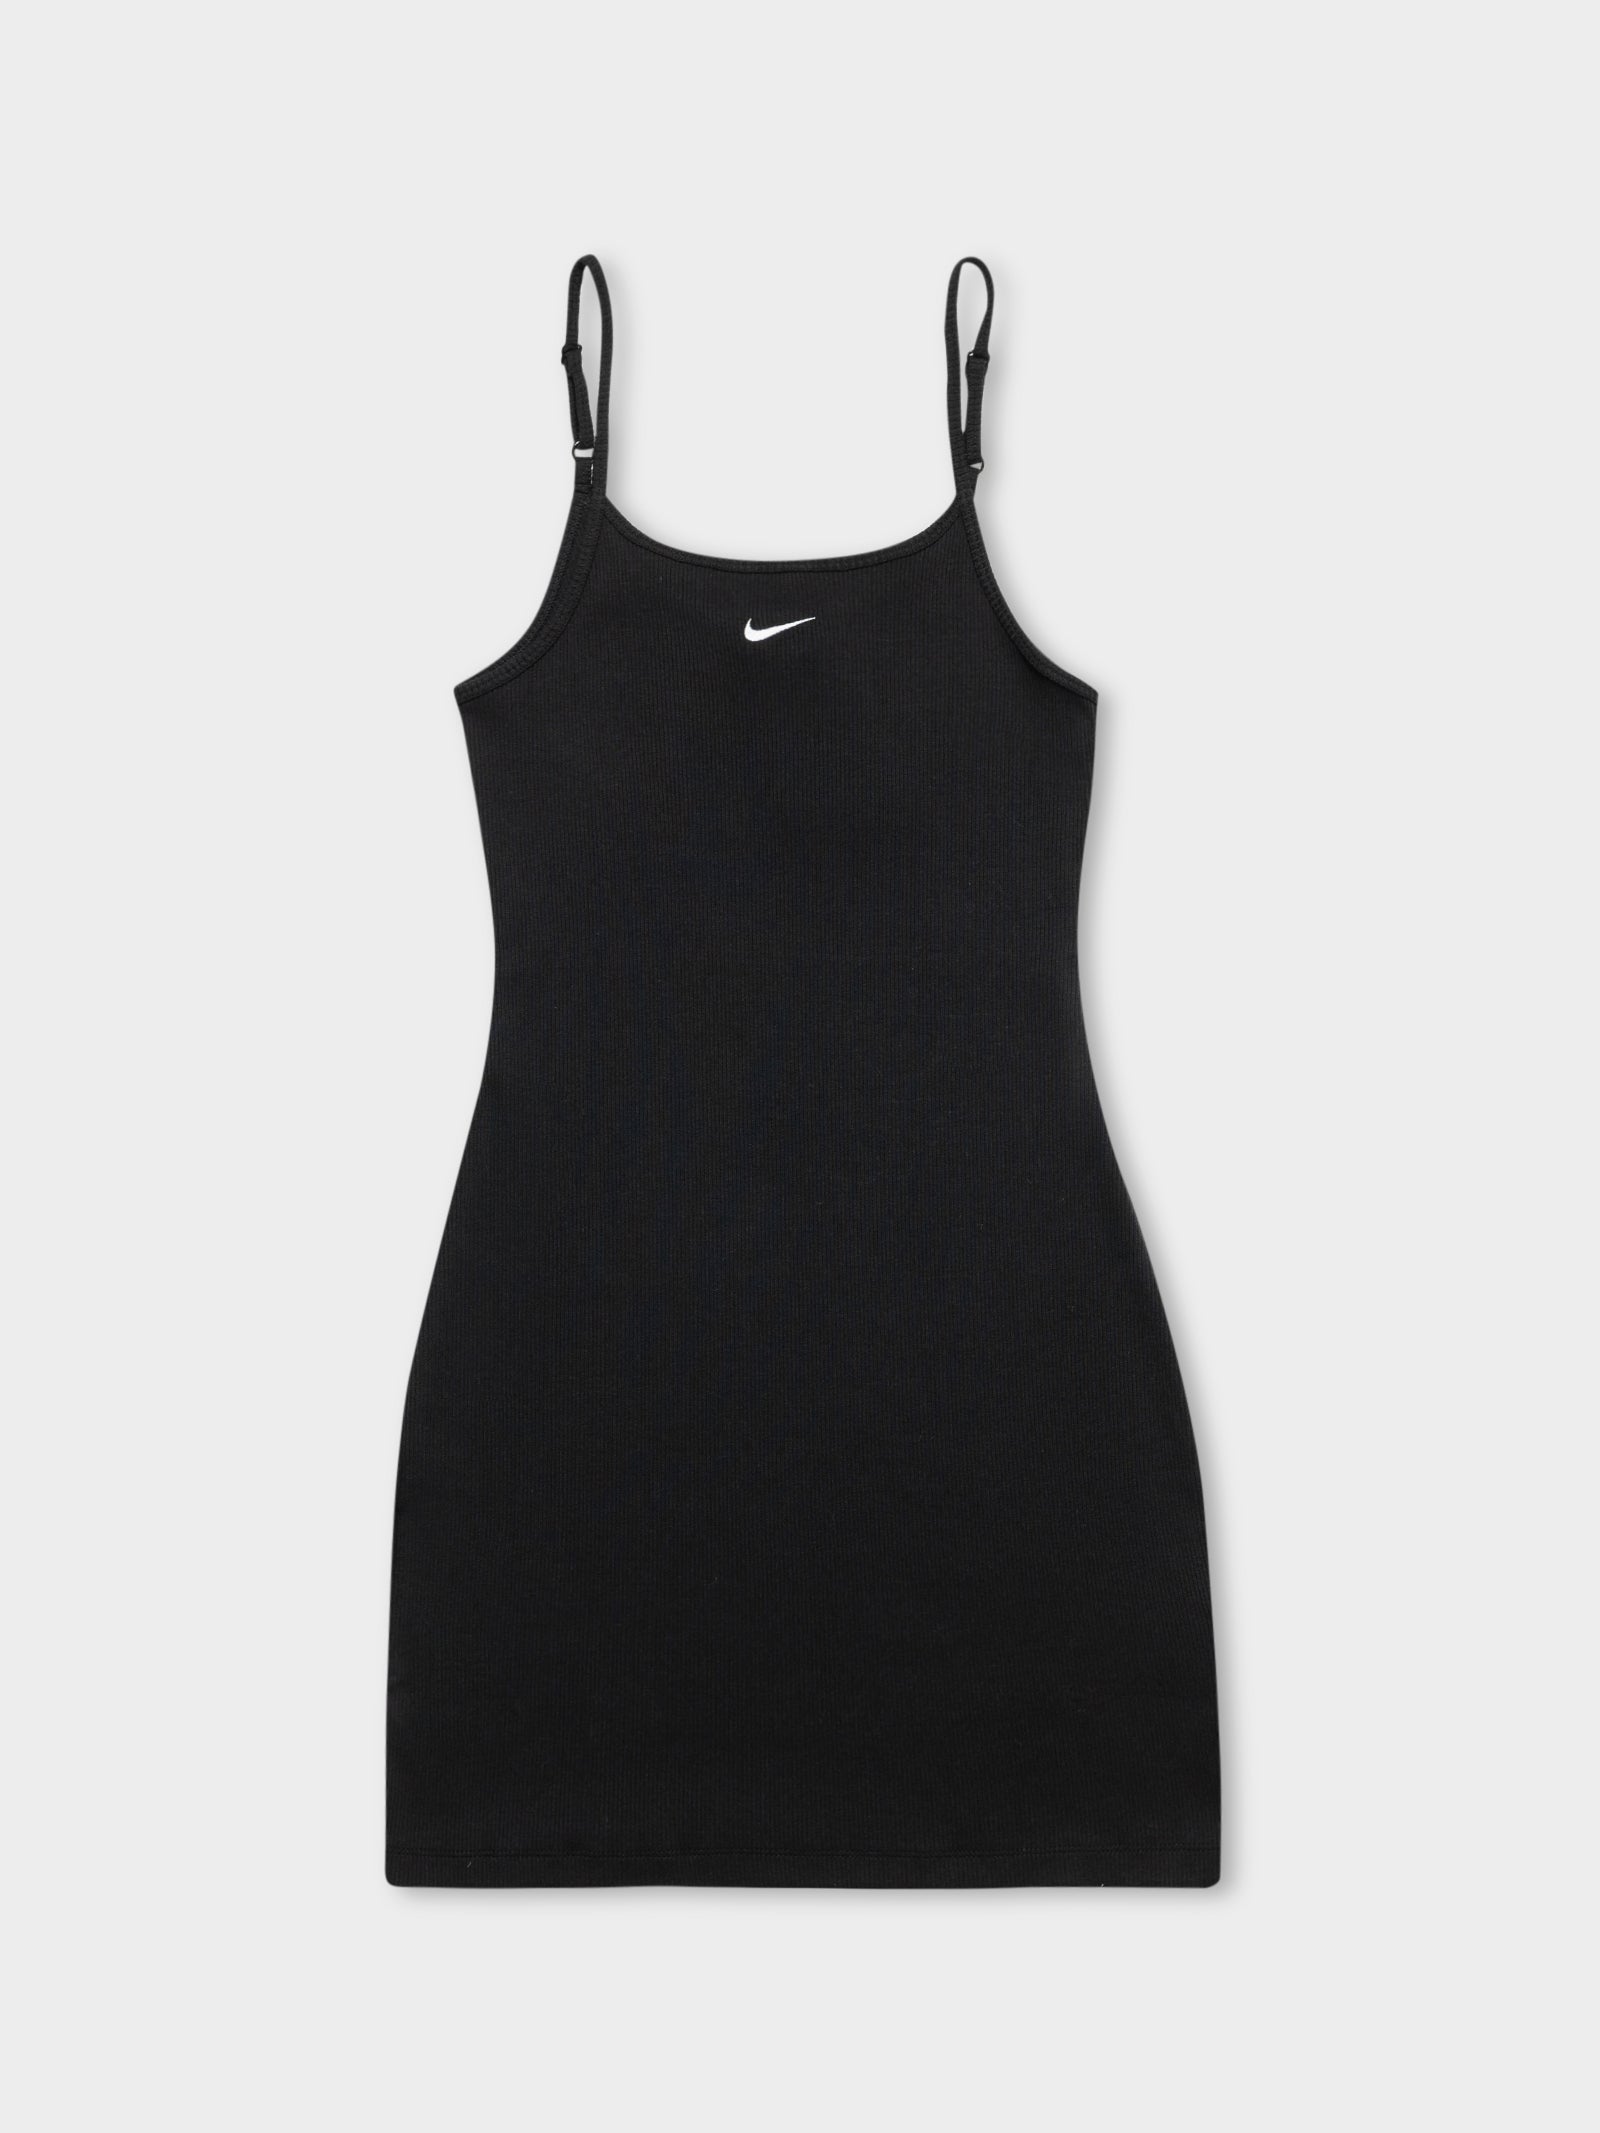 Sportswear Essential Rib Dress in Black & White